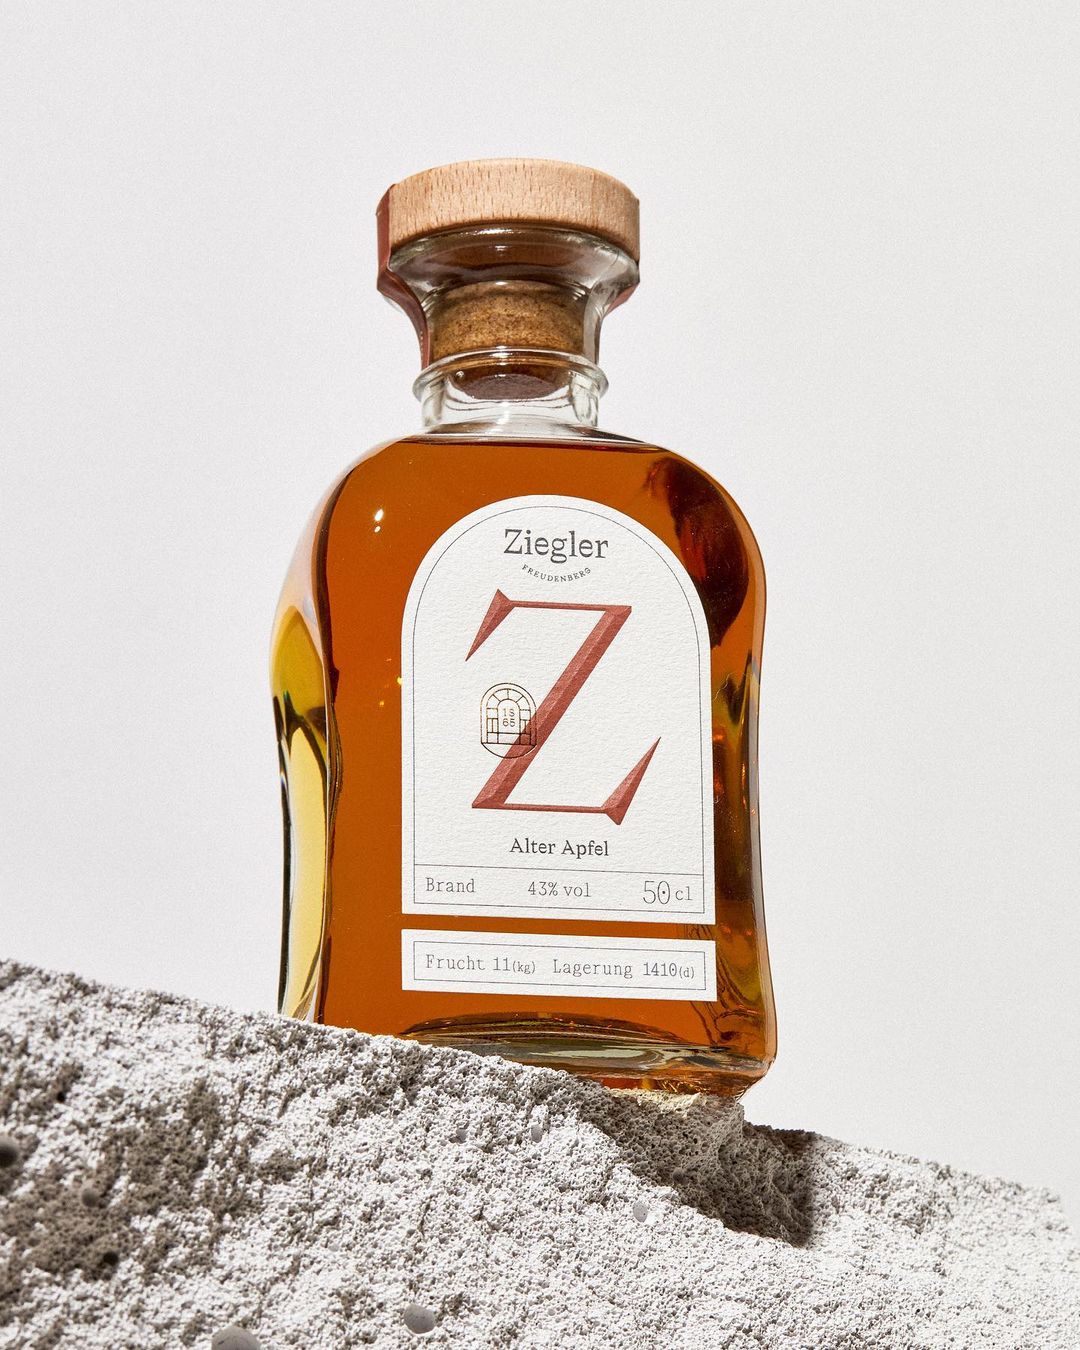 Ziegler distillery